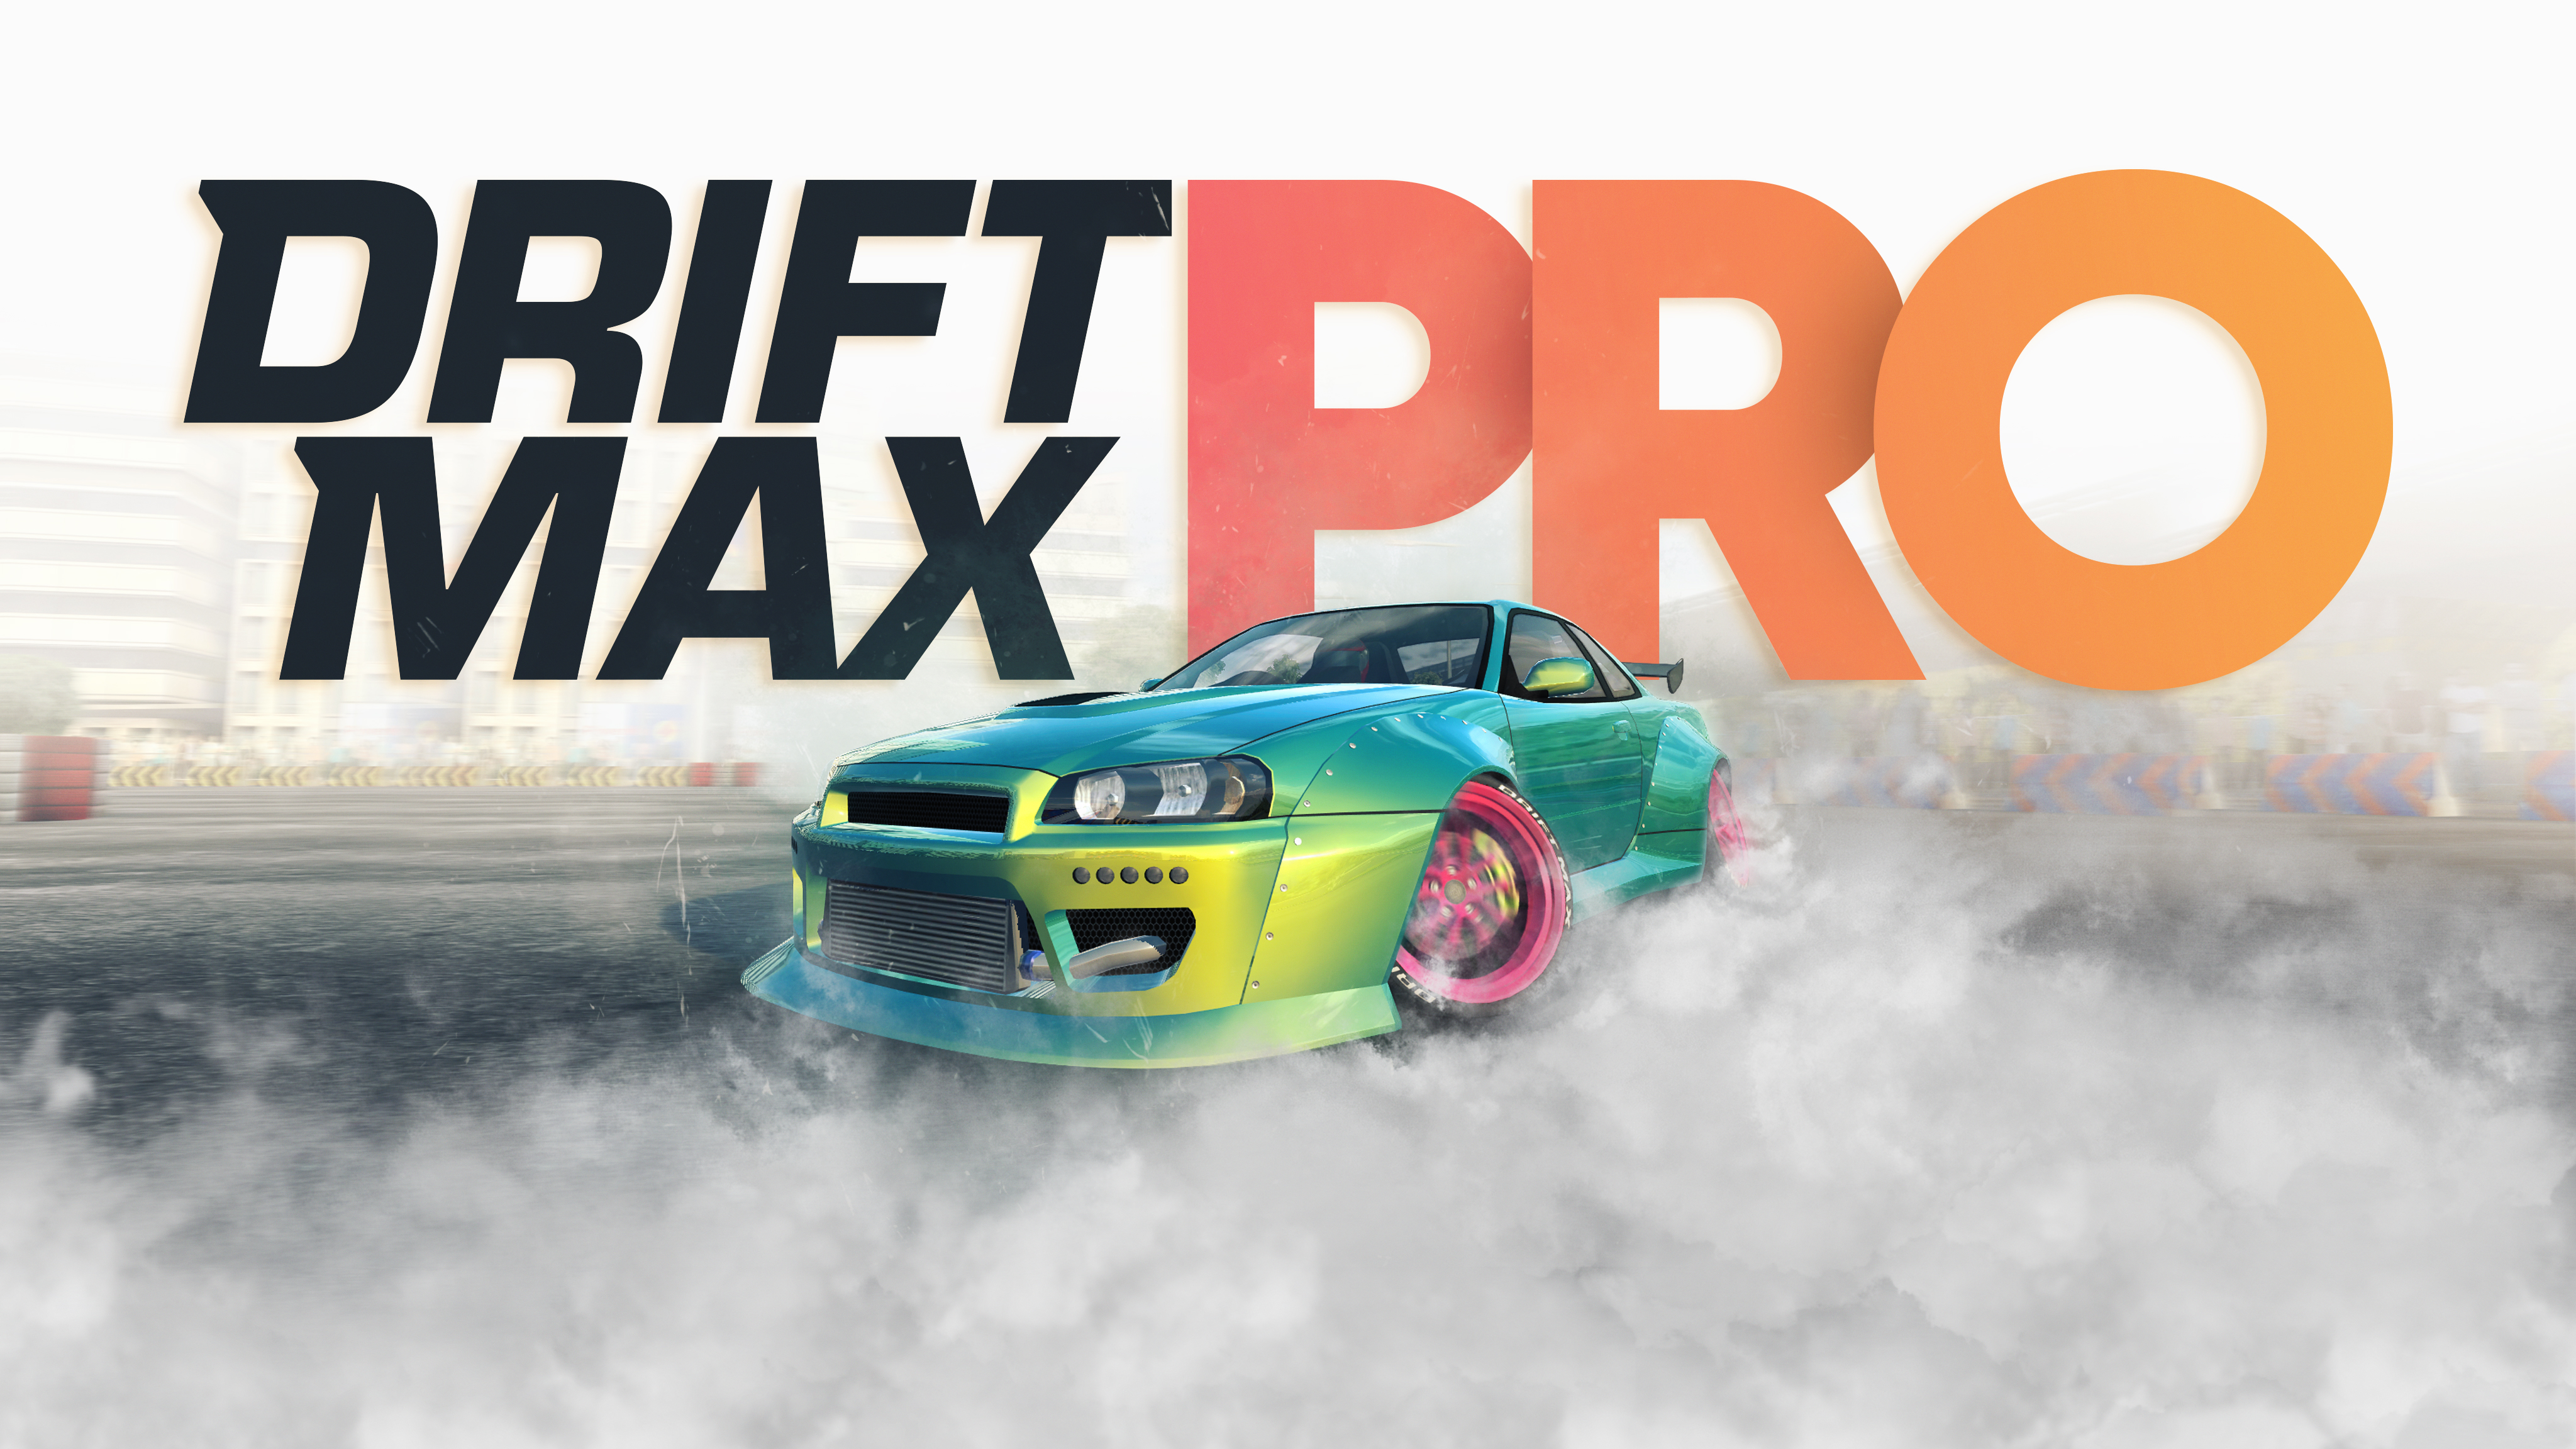 Drift max pro в злом